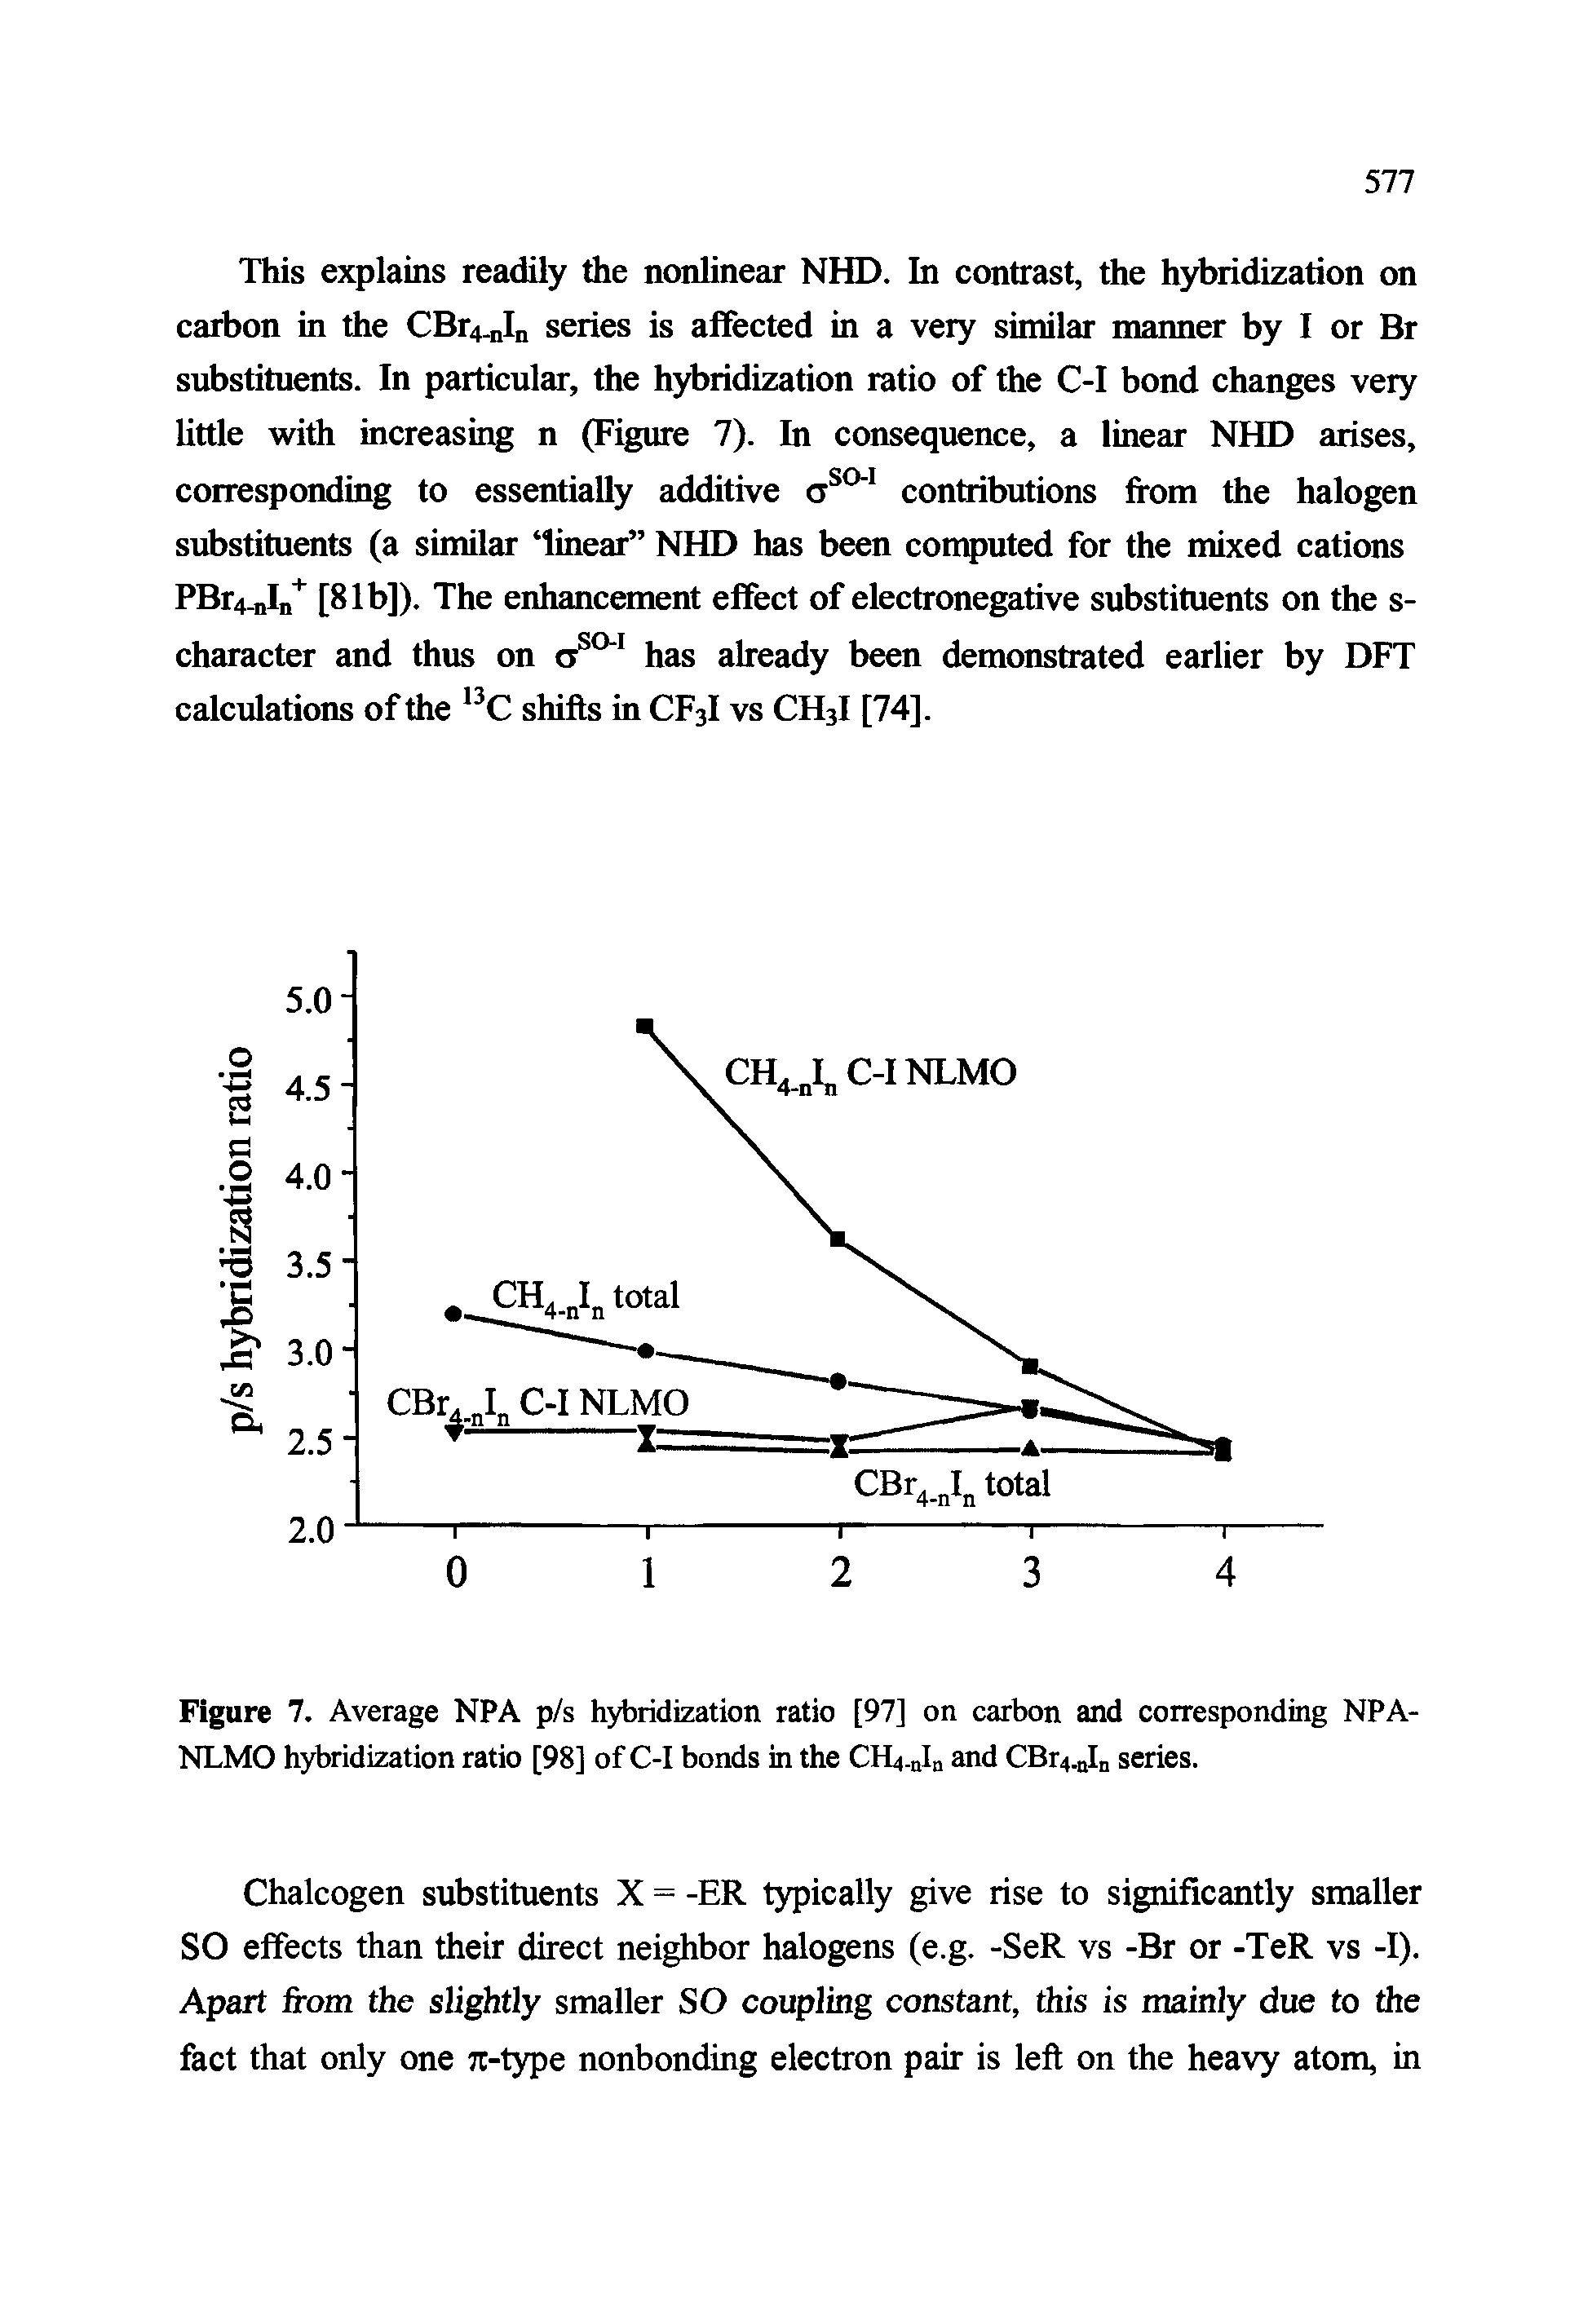 Figure 7. Average NPA p/s hybridization ratio [97] on carbon and corresponding NPA-NLMO hybridization ratio [98] of C-I bonds in the CUt.Jn and CBr4.oIn series.